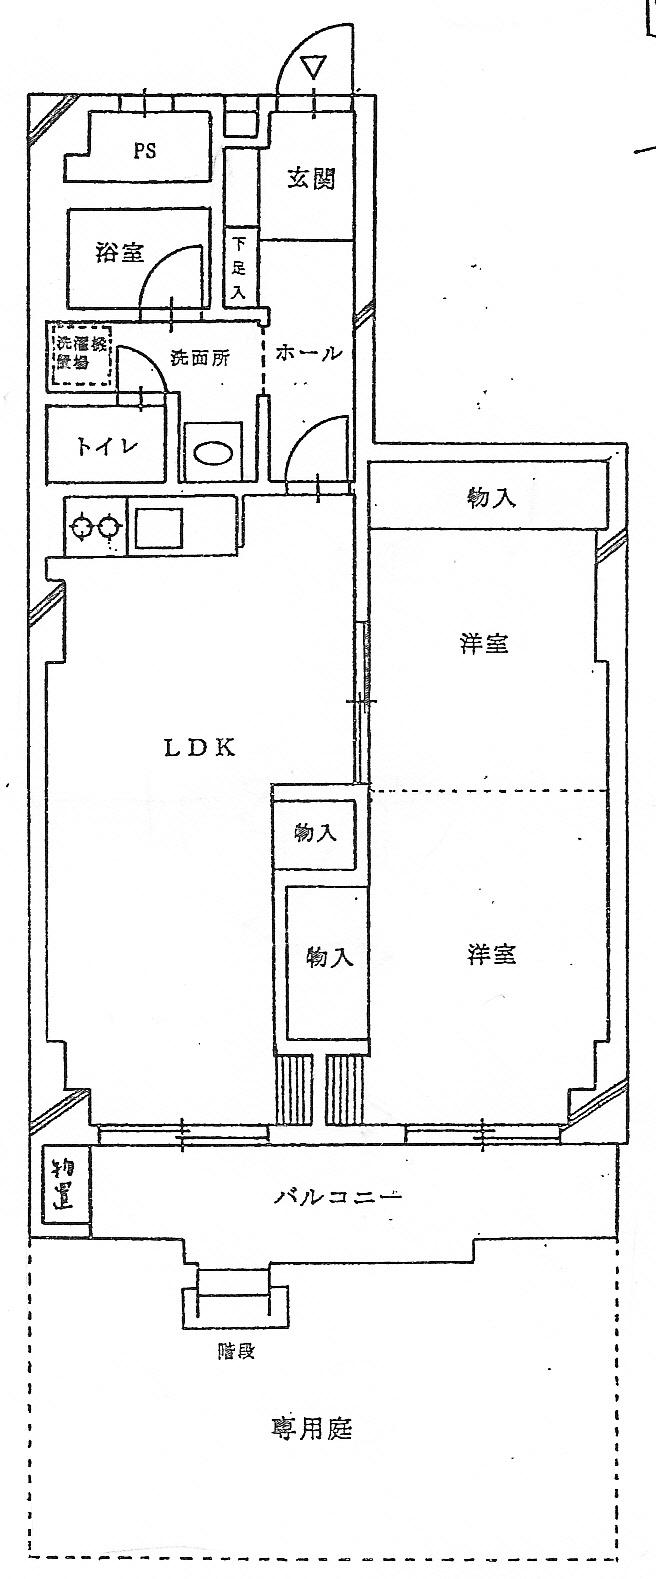 Floor plan. 2LDK, Price 7 million yen, Occupied area 54.79 sq m , Balcony area 6.1 sq m